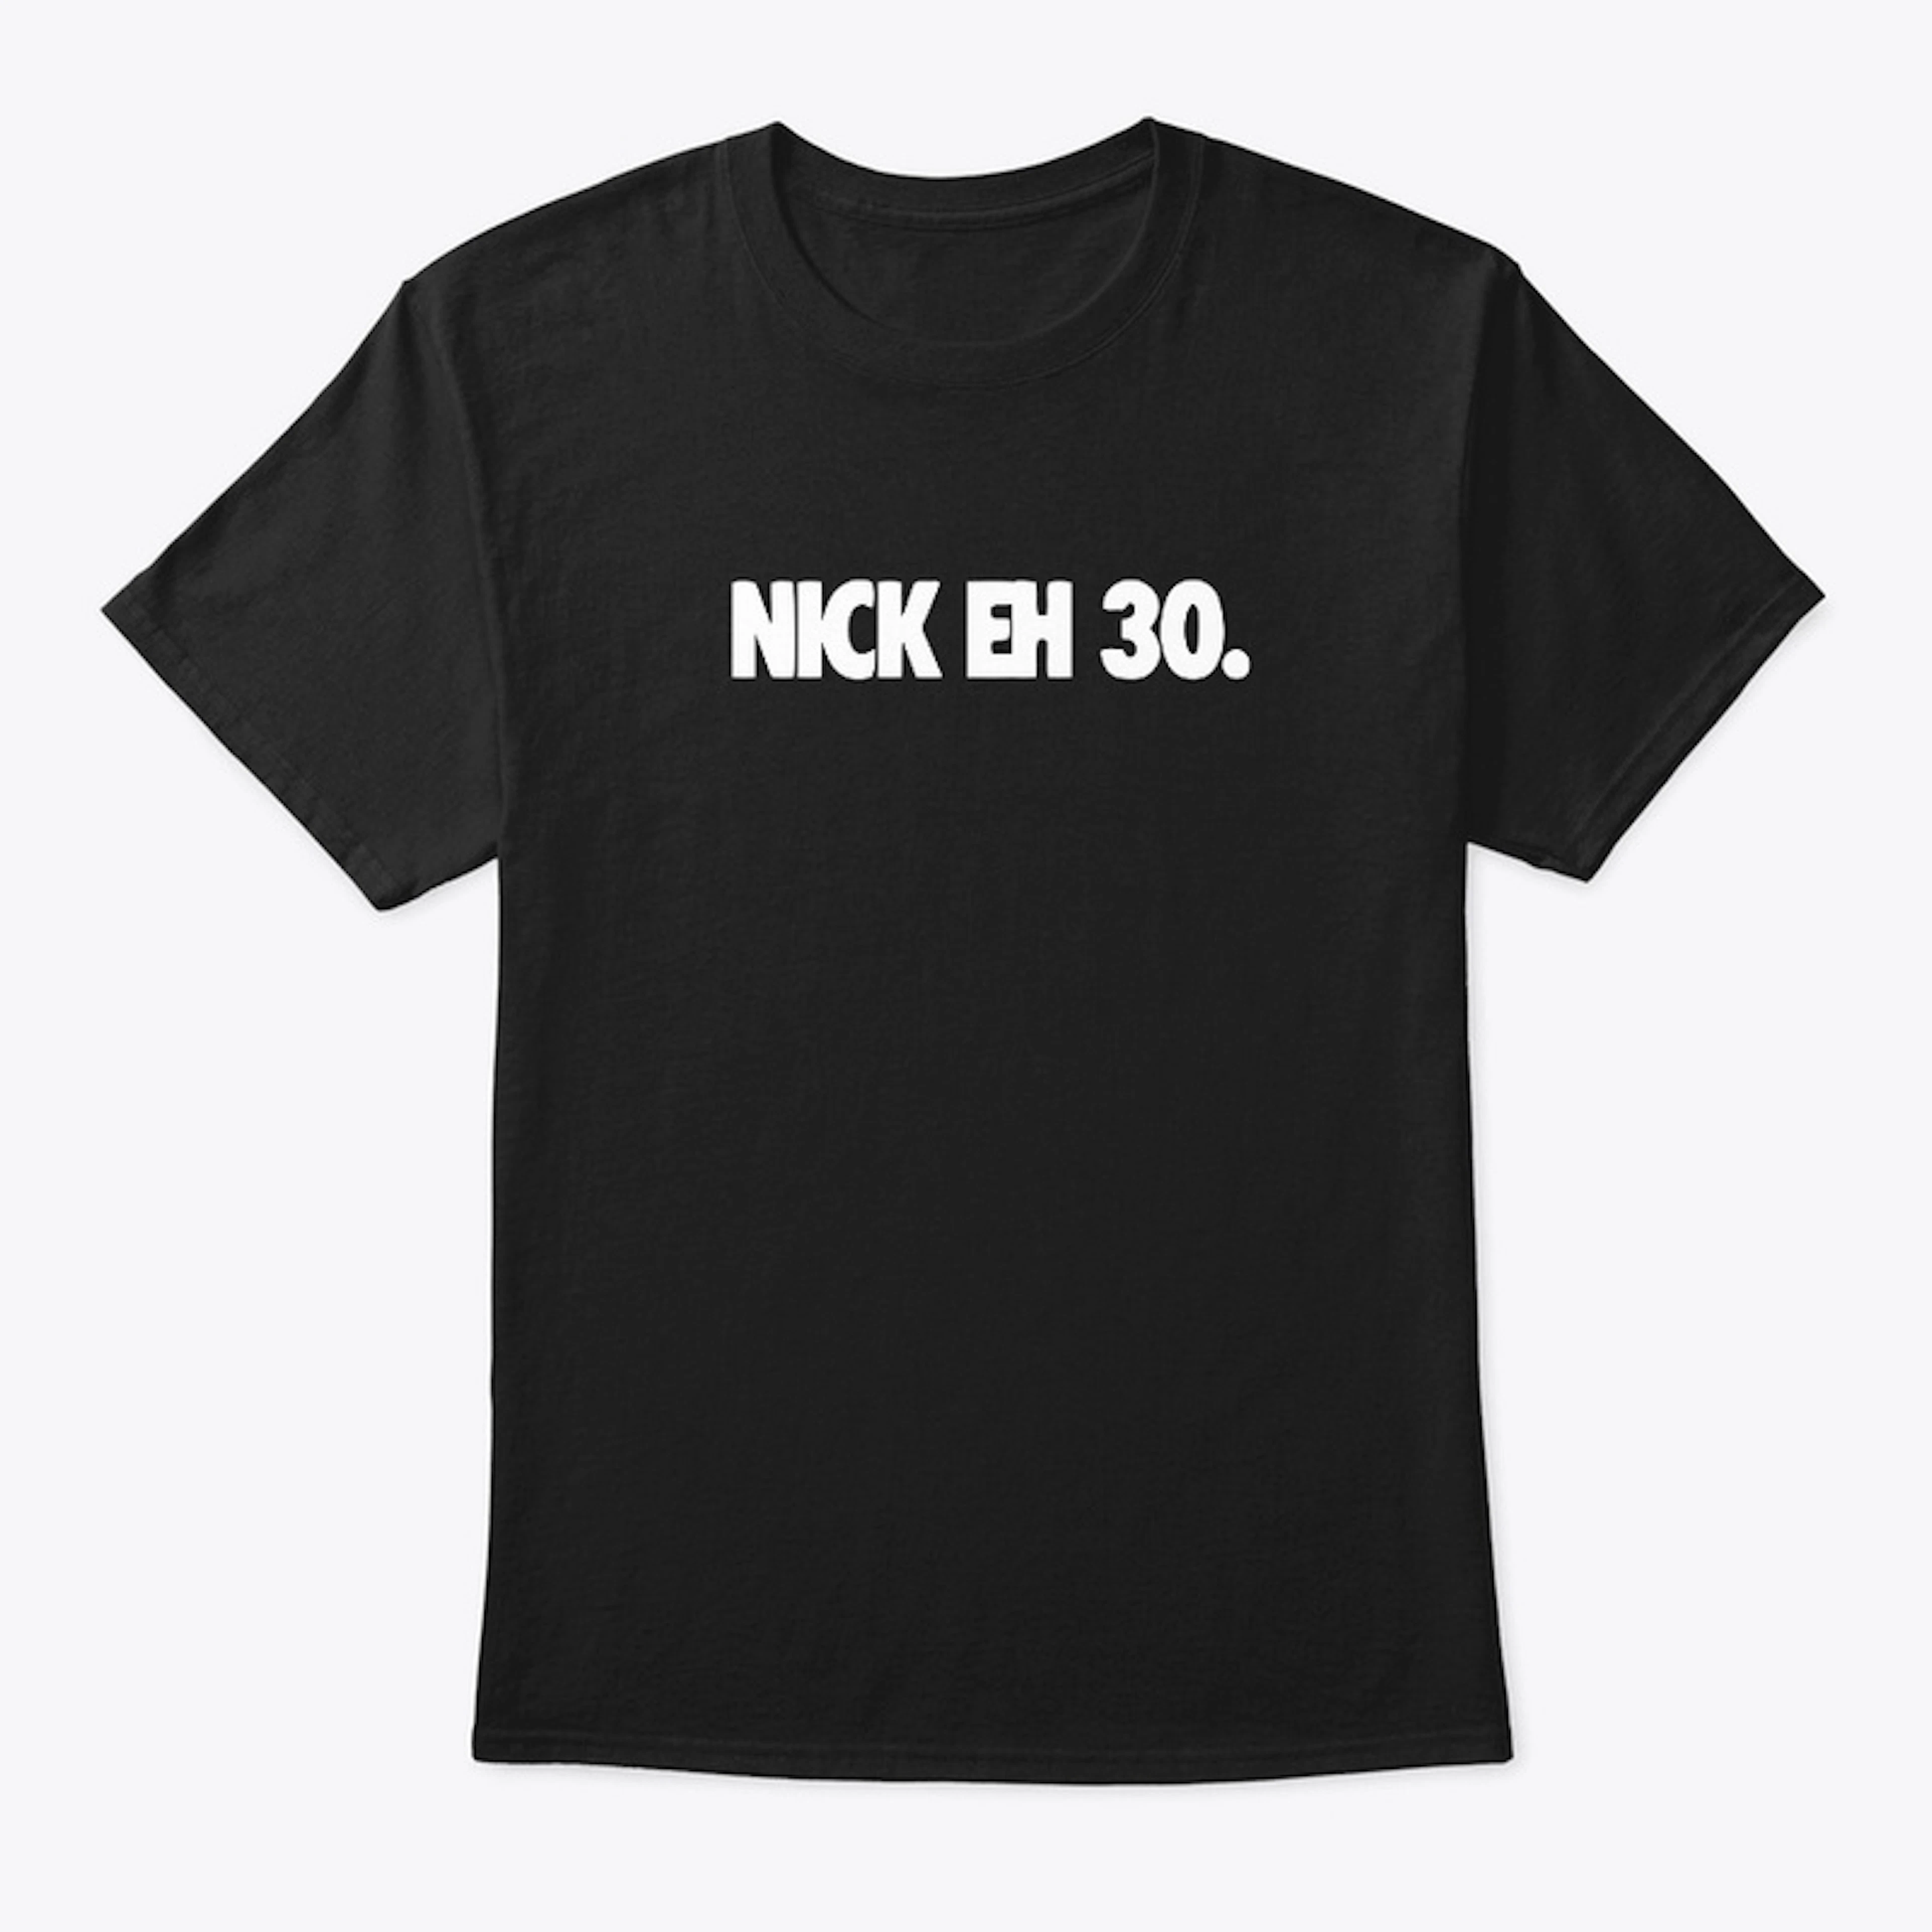 Nick Eh 30 Merch